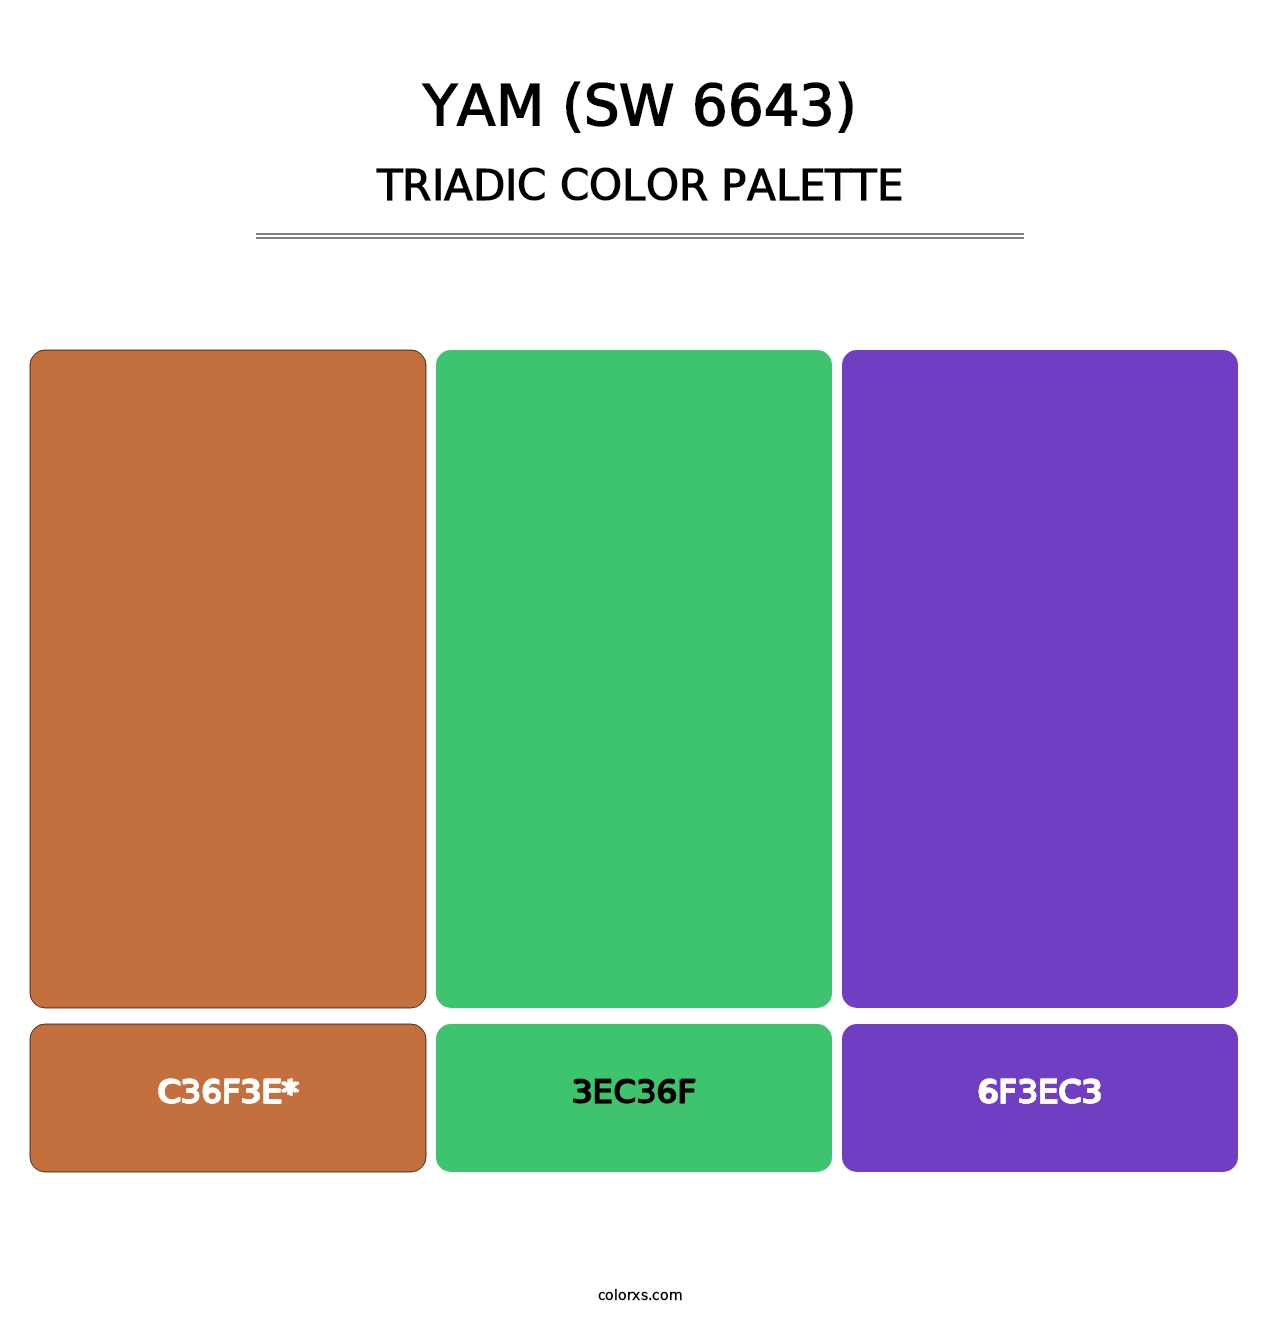 Yam (SW 6643) - Triadic Color Palette